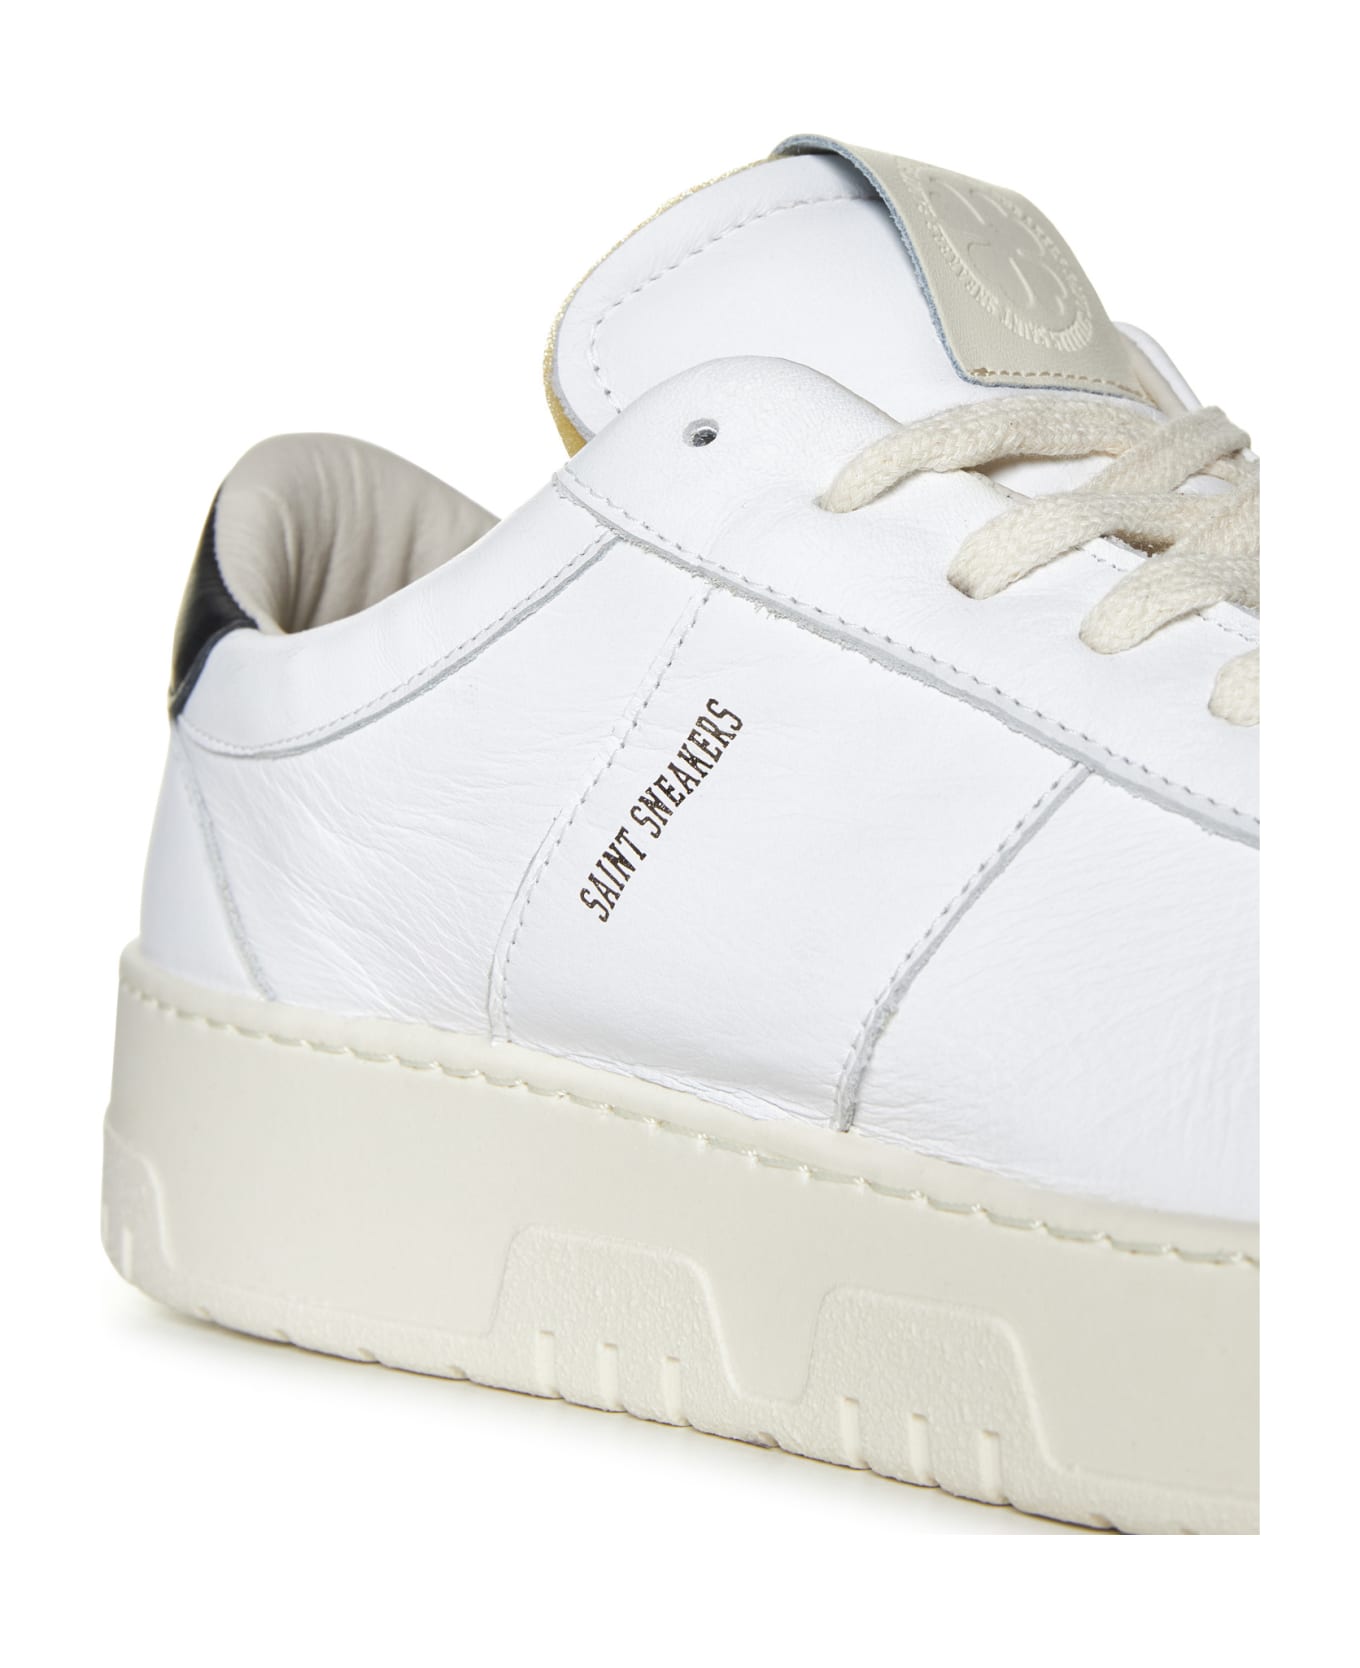 Saint Sneakers Sneakers - Bianco/nero